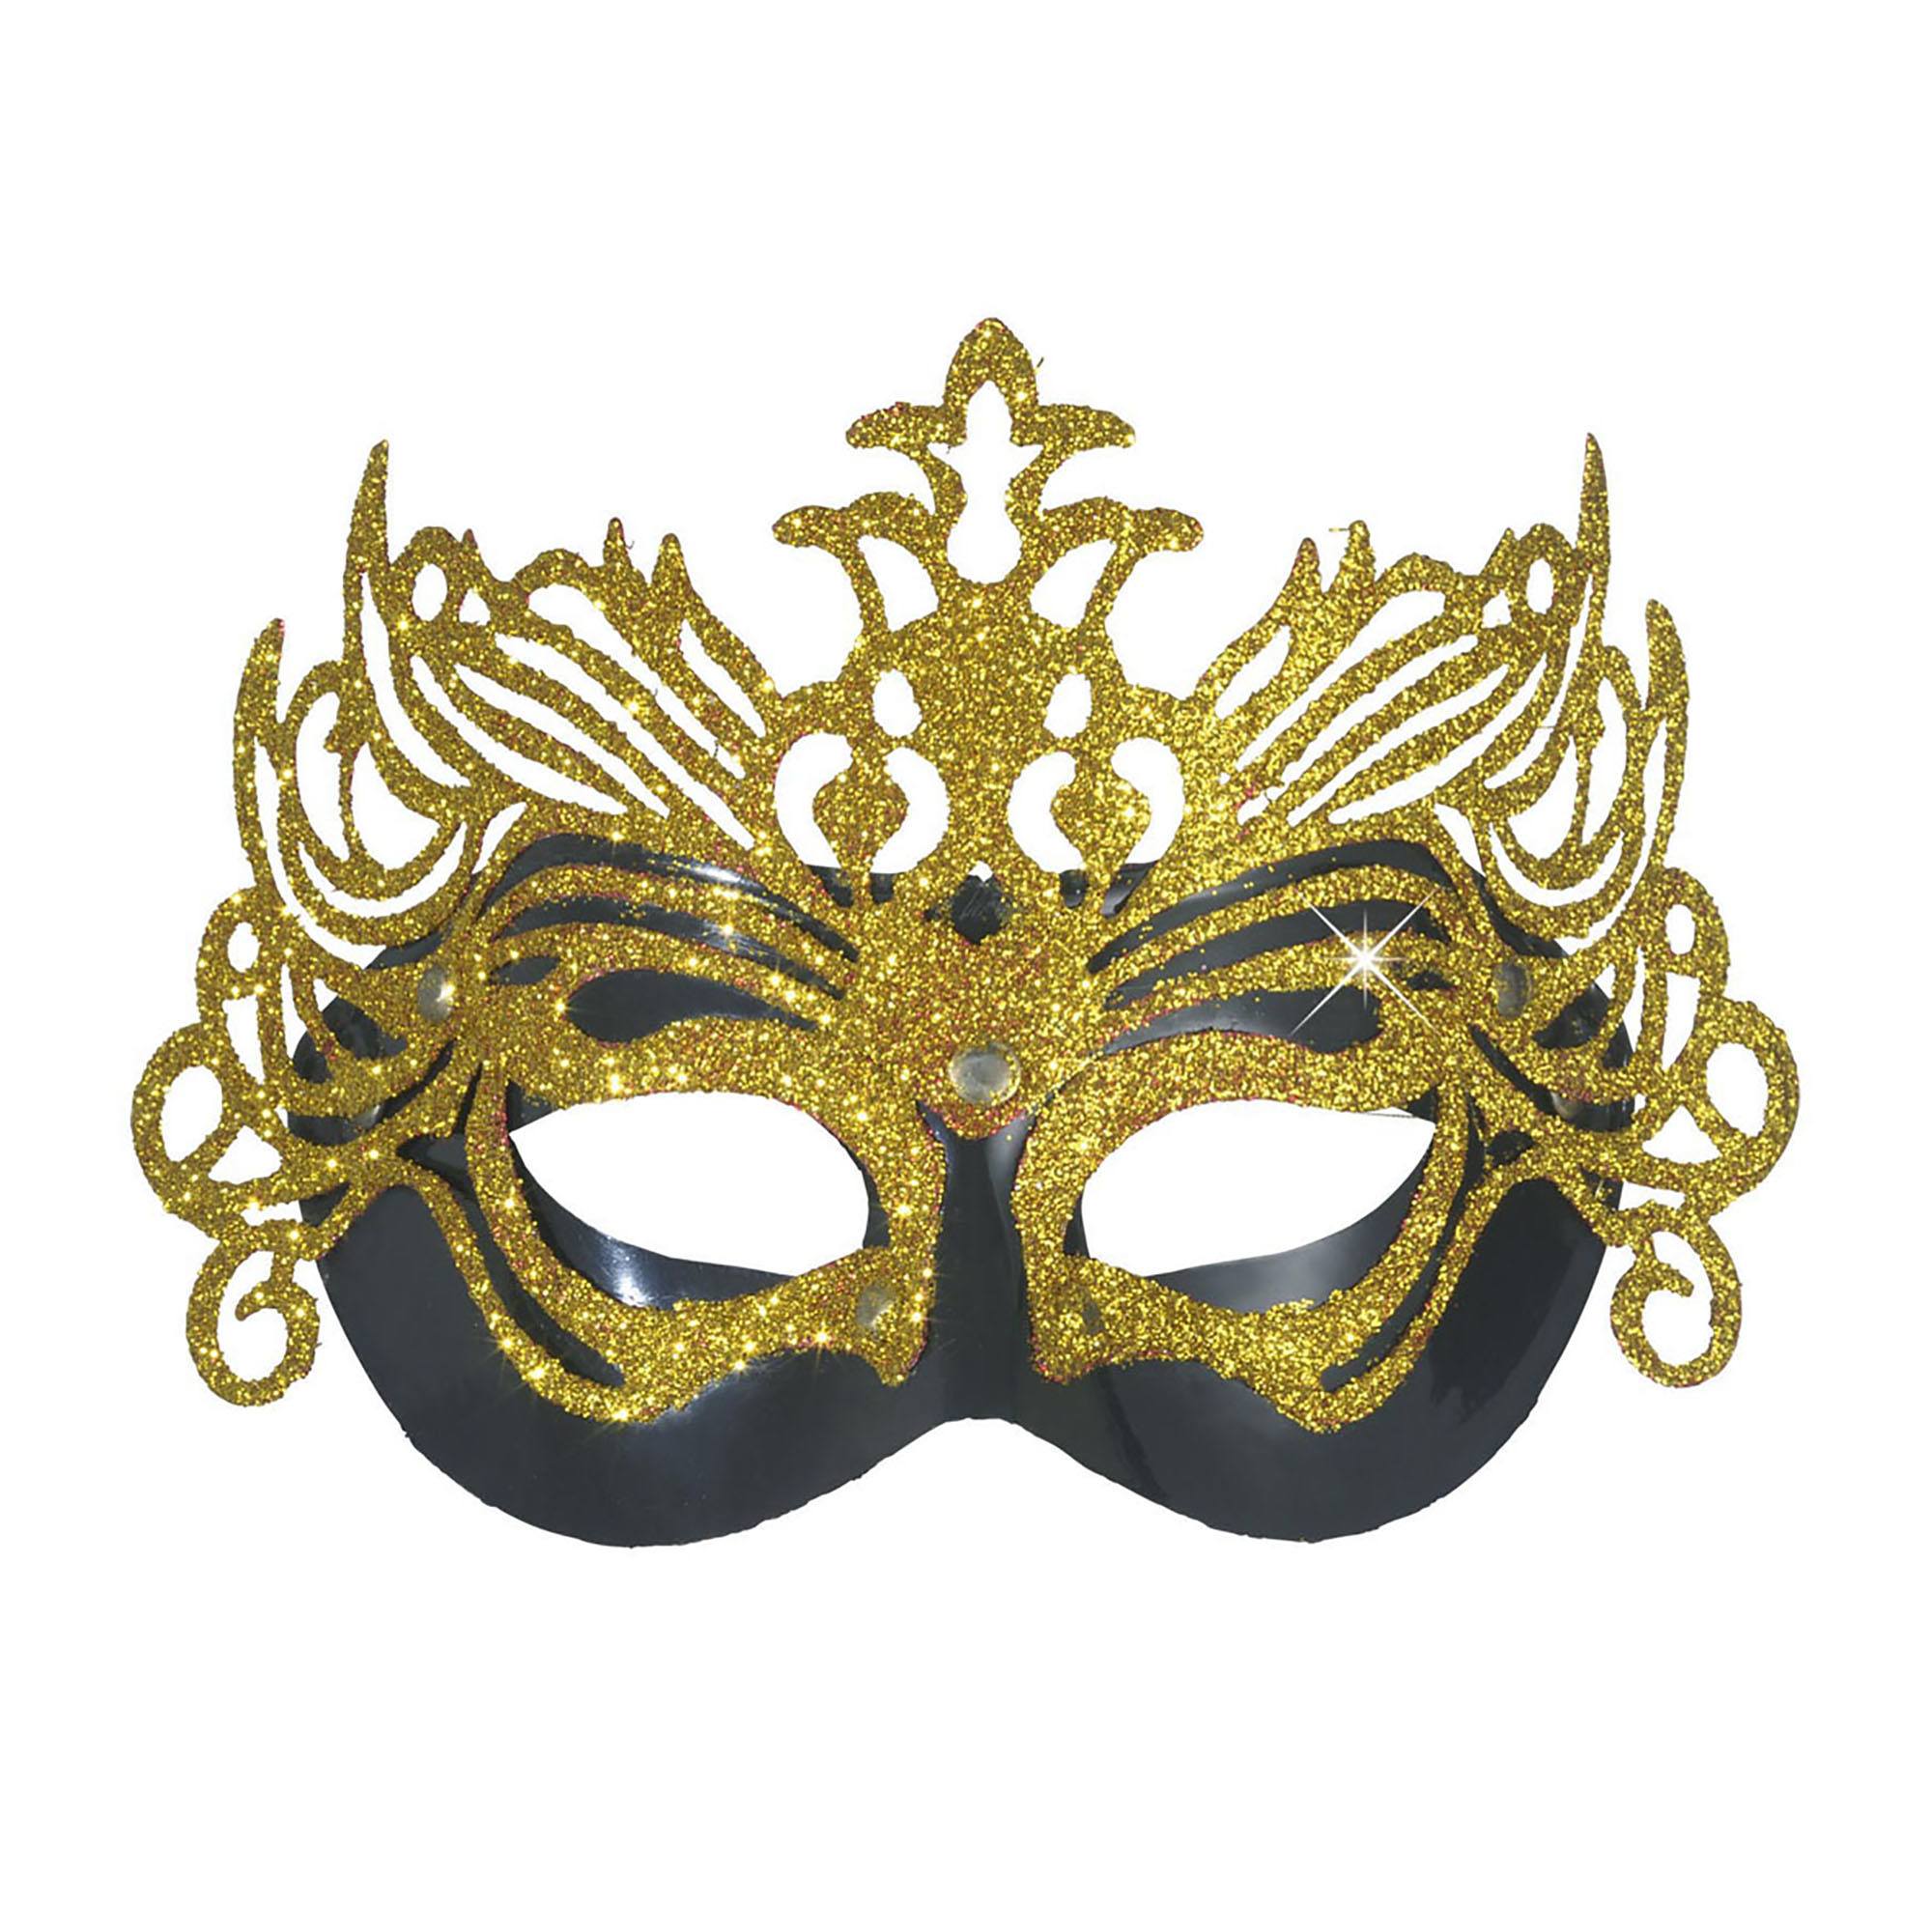 Oogmasker goud met zwart carnaval volwassen